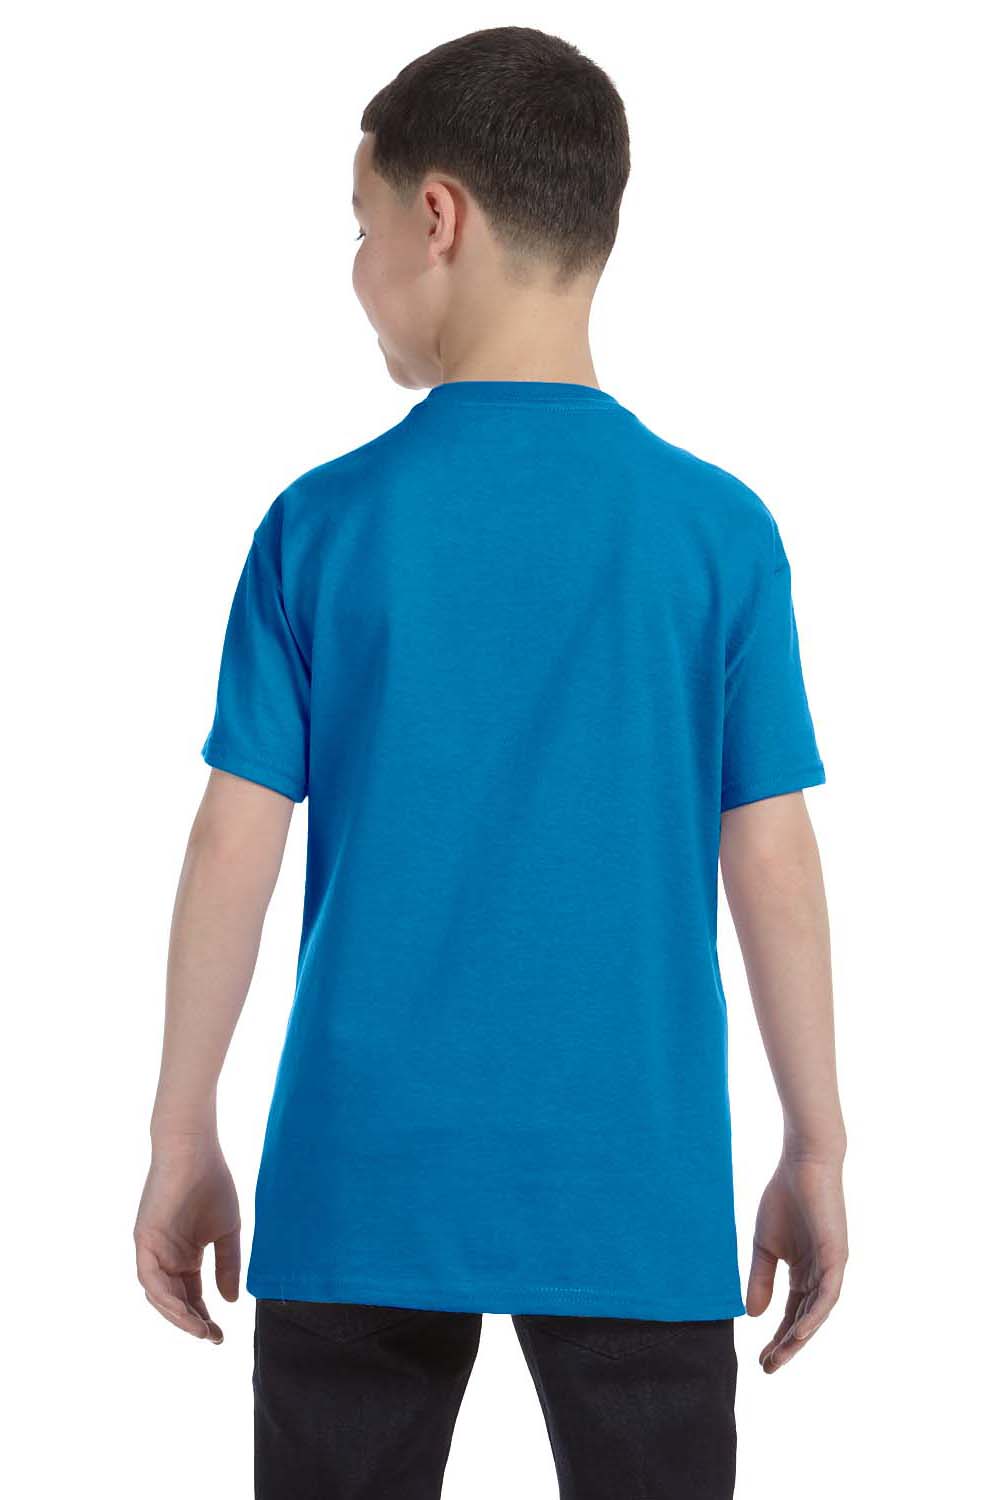 Hanes 54500 Youth ComfortSoft Short Sleeve Crewneck T-Shirt Sapphire Blue Back